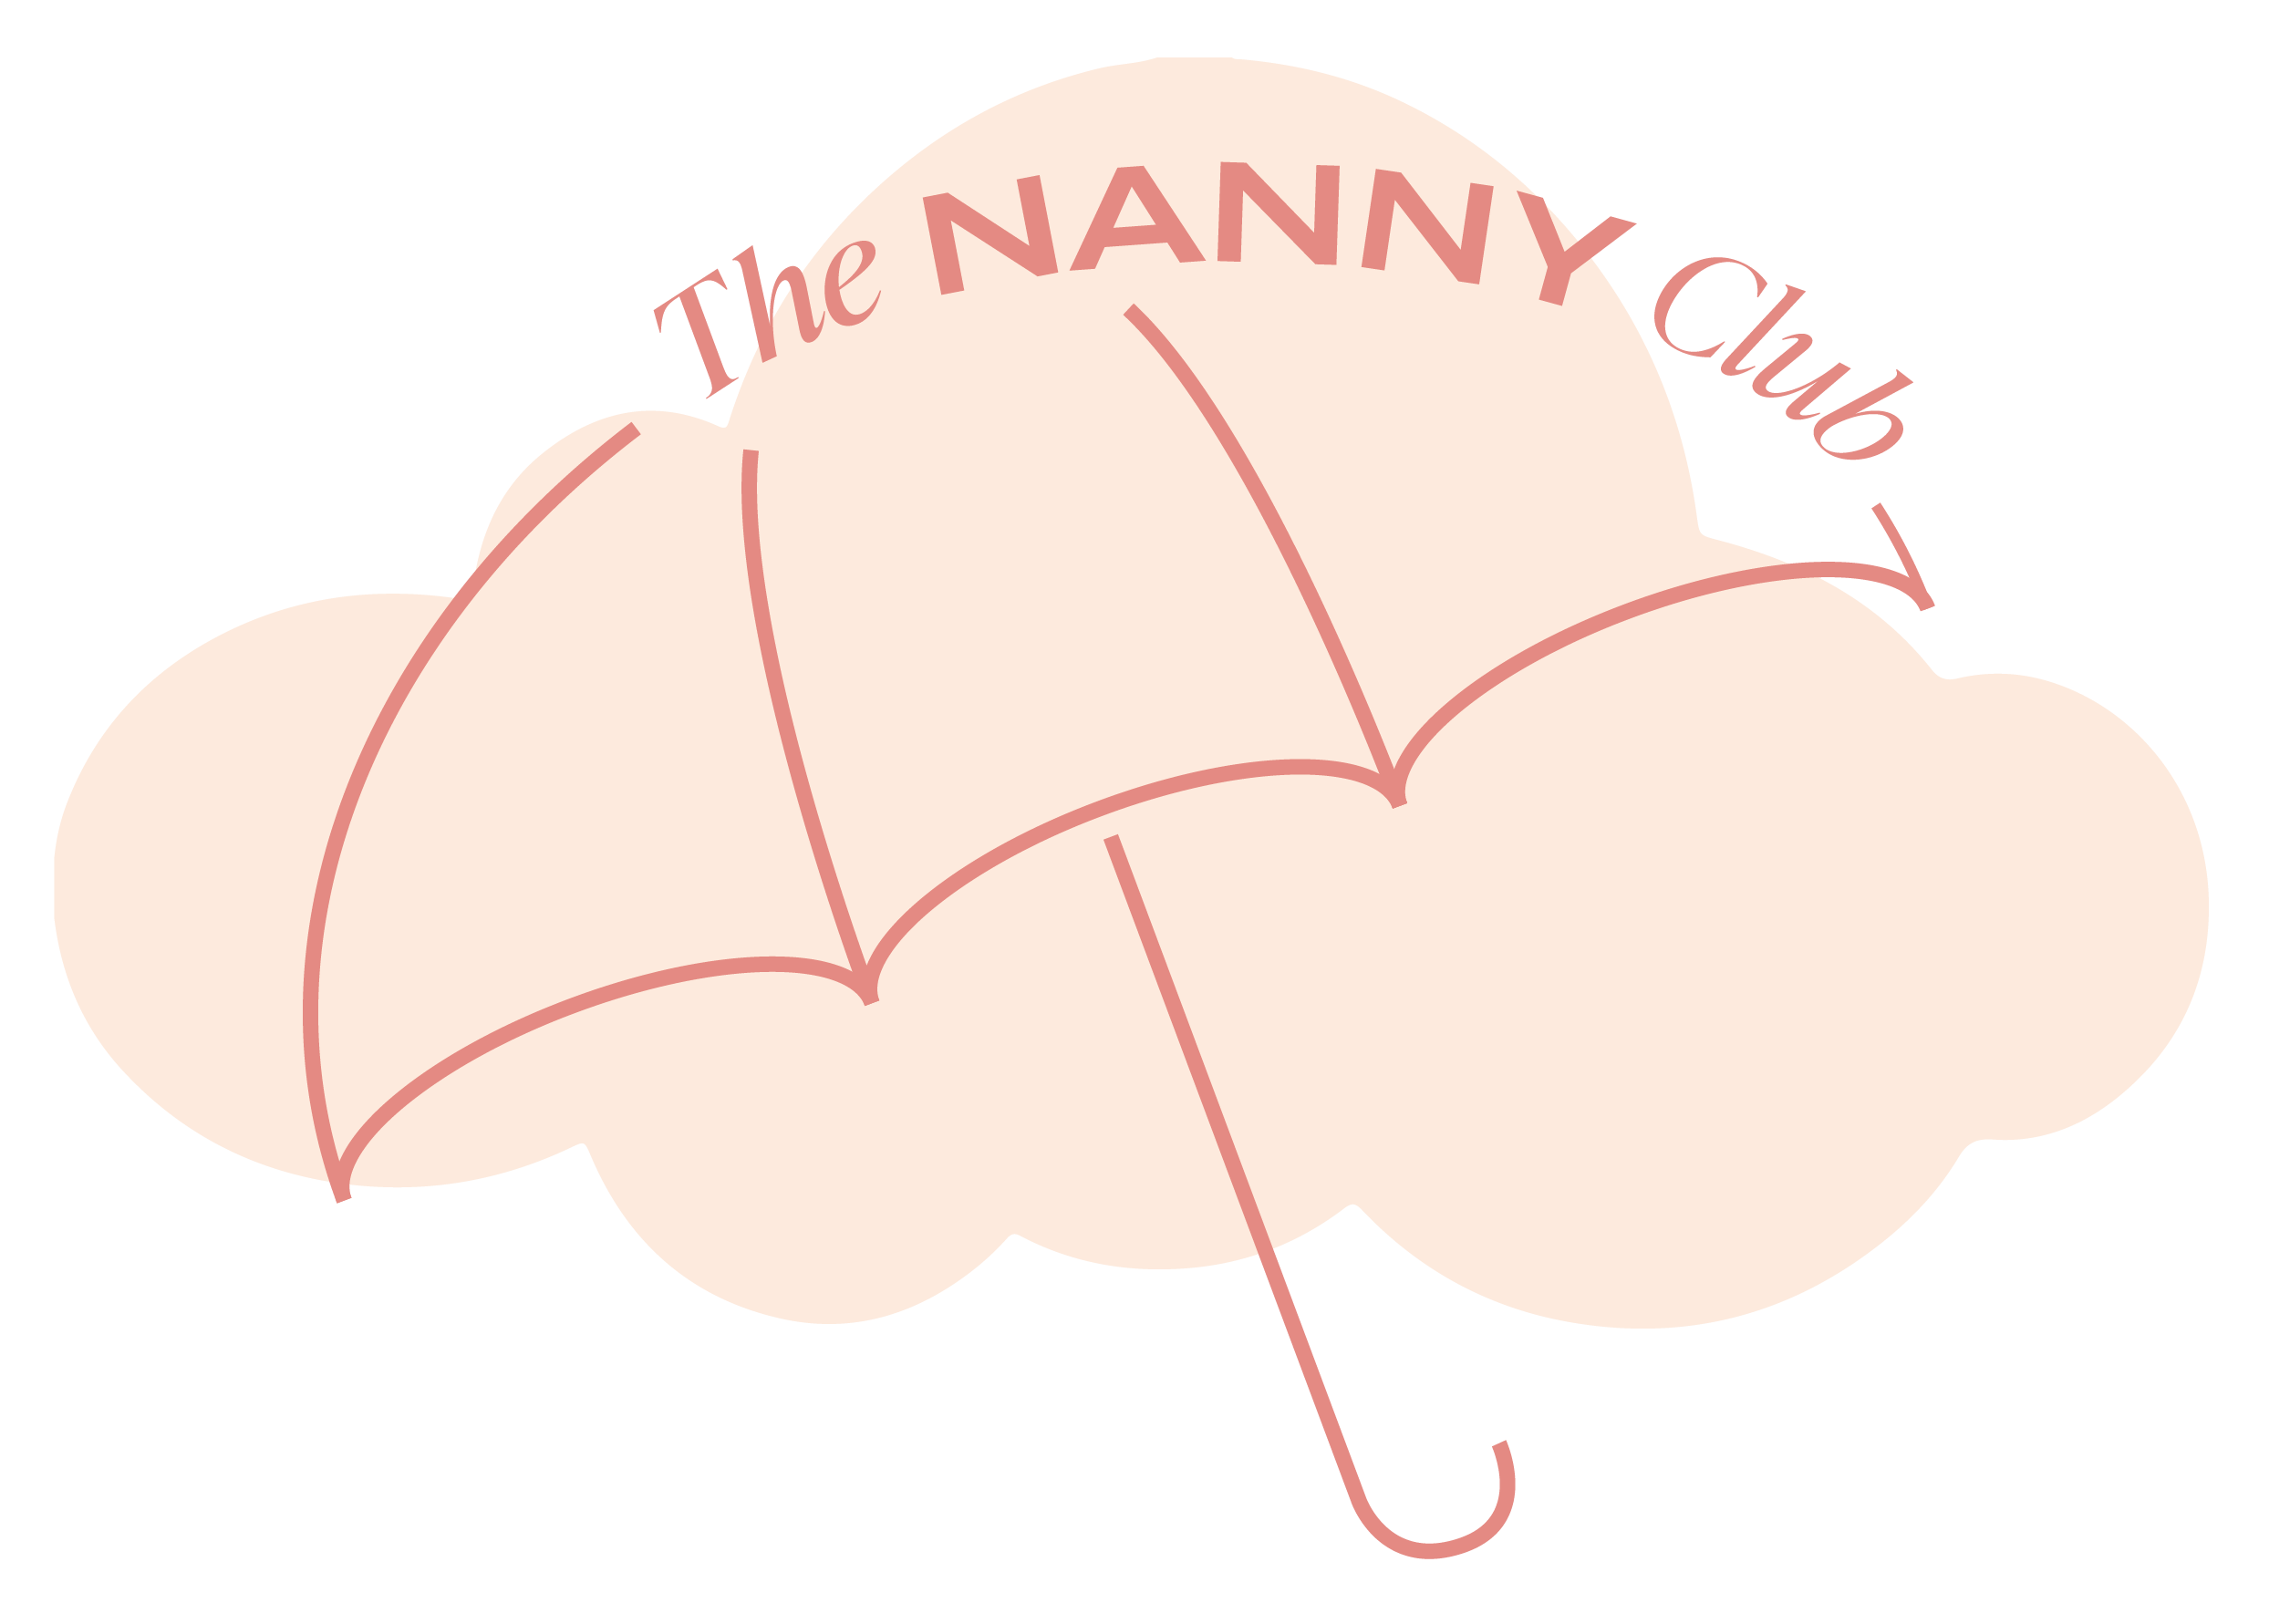 The Nanny Club